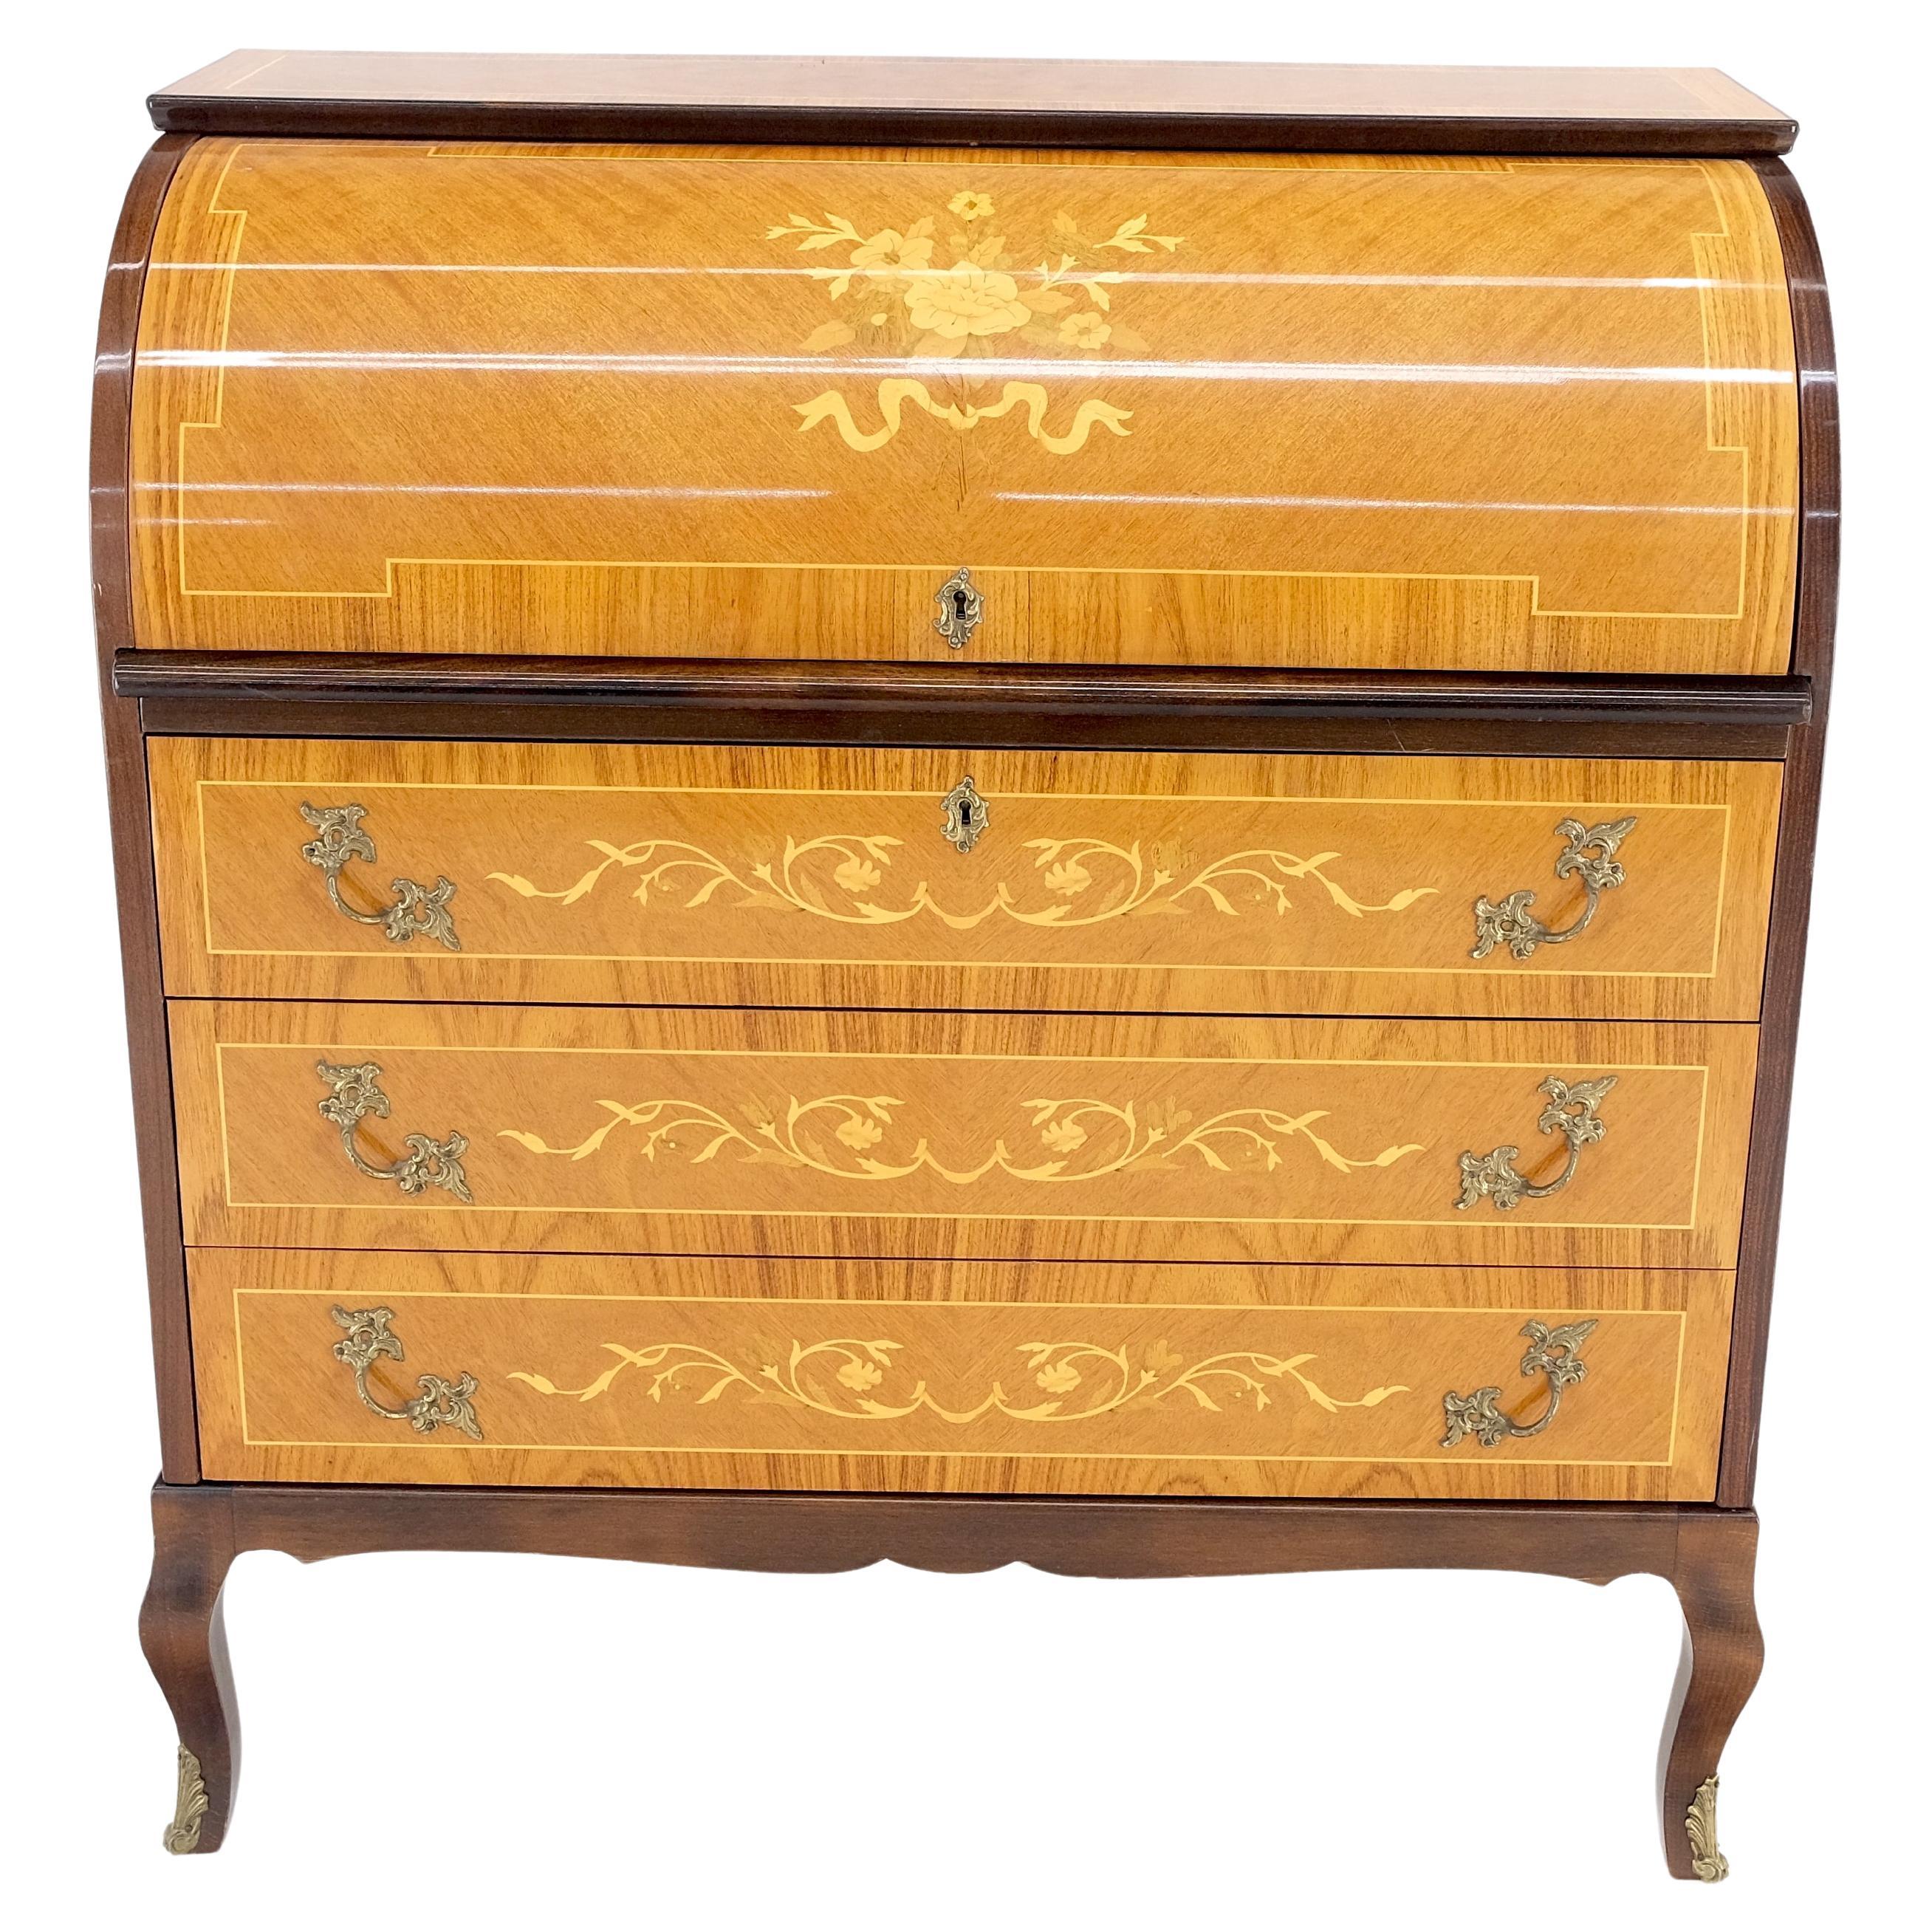 Italian Inlaid satinwood cylinder top secretary desk chest drawers dresser mint!